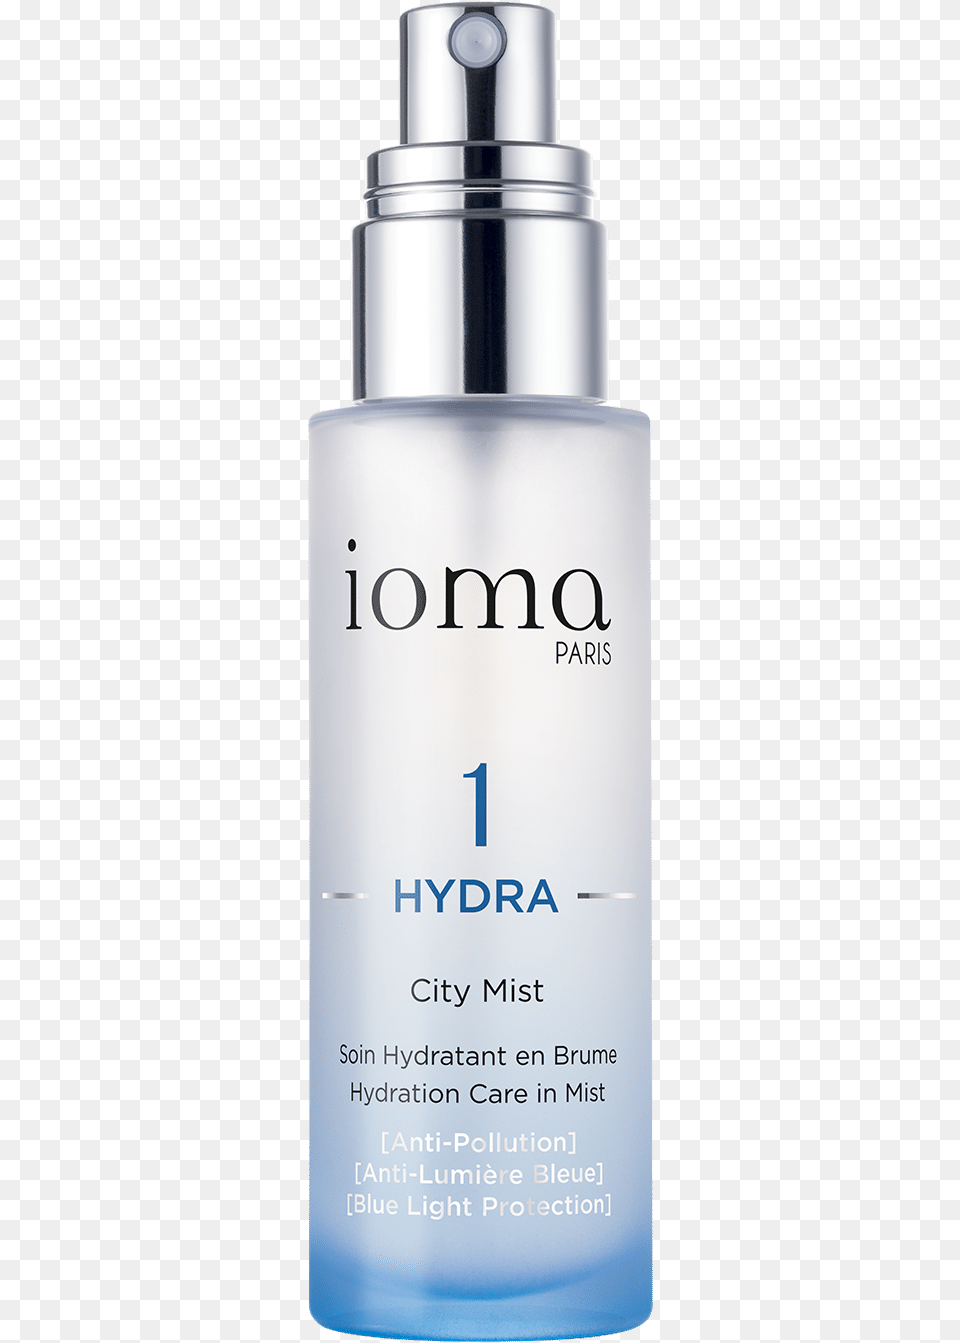 City Mist Hydra Cosmetics, Bottle, Perfume Png Image